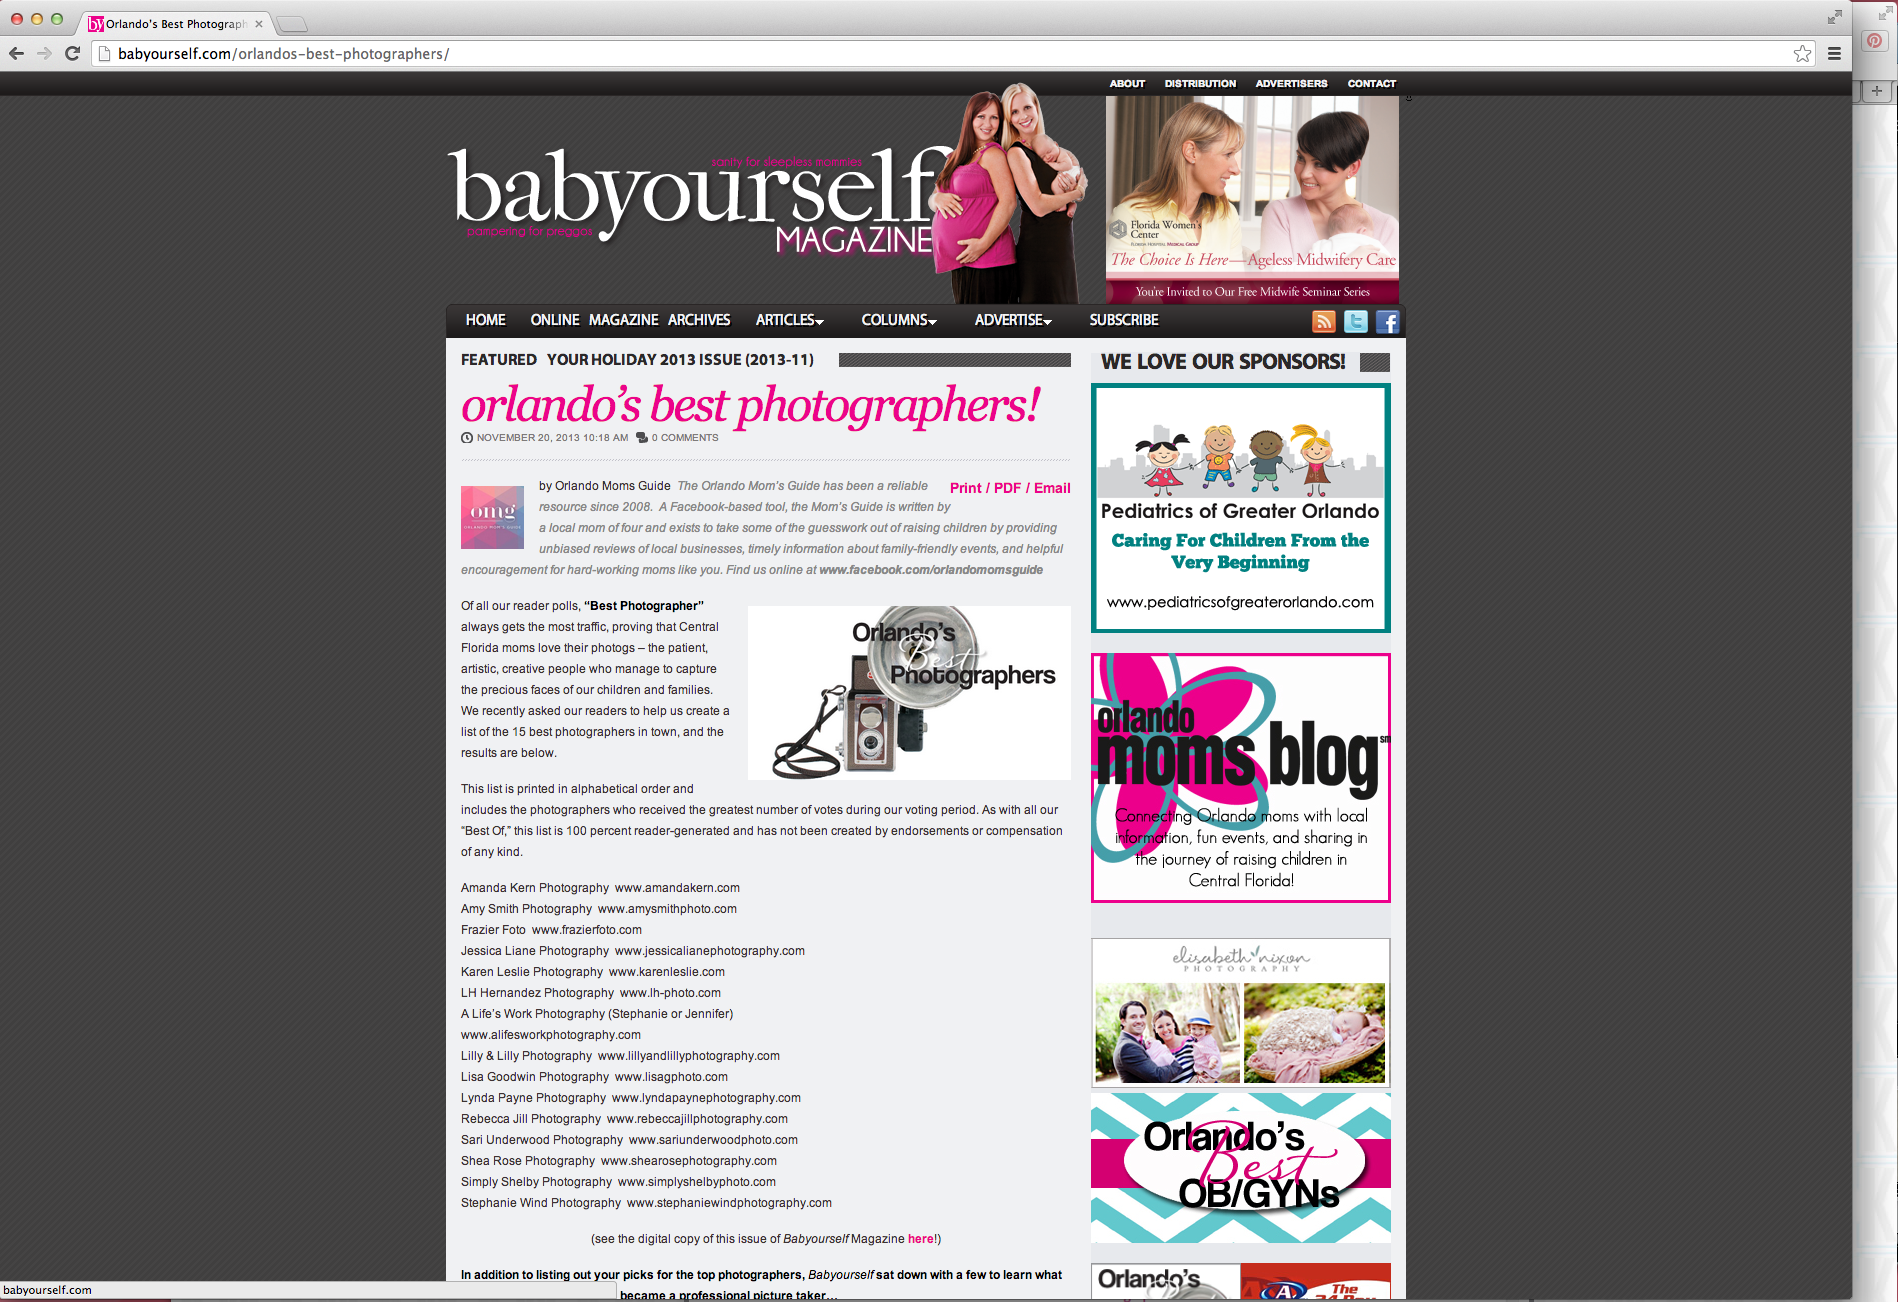 Babyourself Magazine Orlando’s Best Photographers 2013 | Sari Underwood Photography